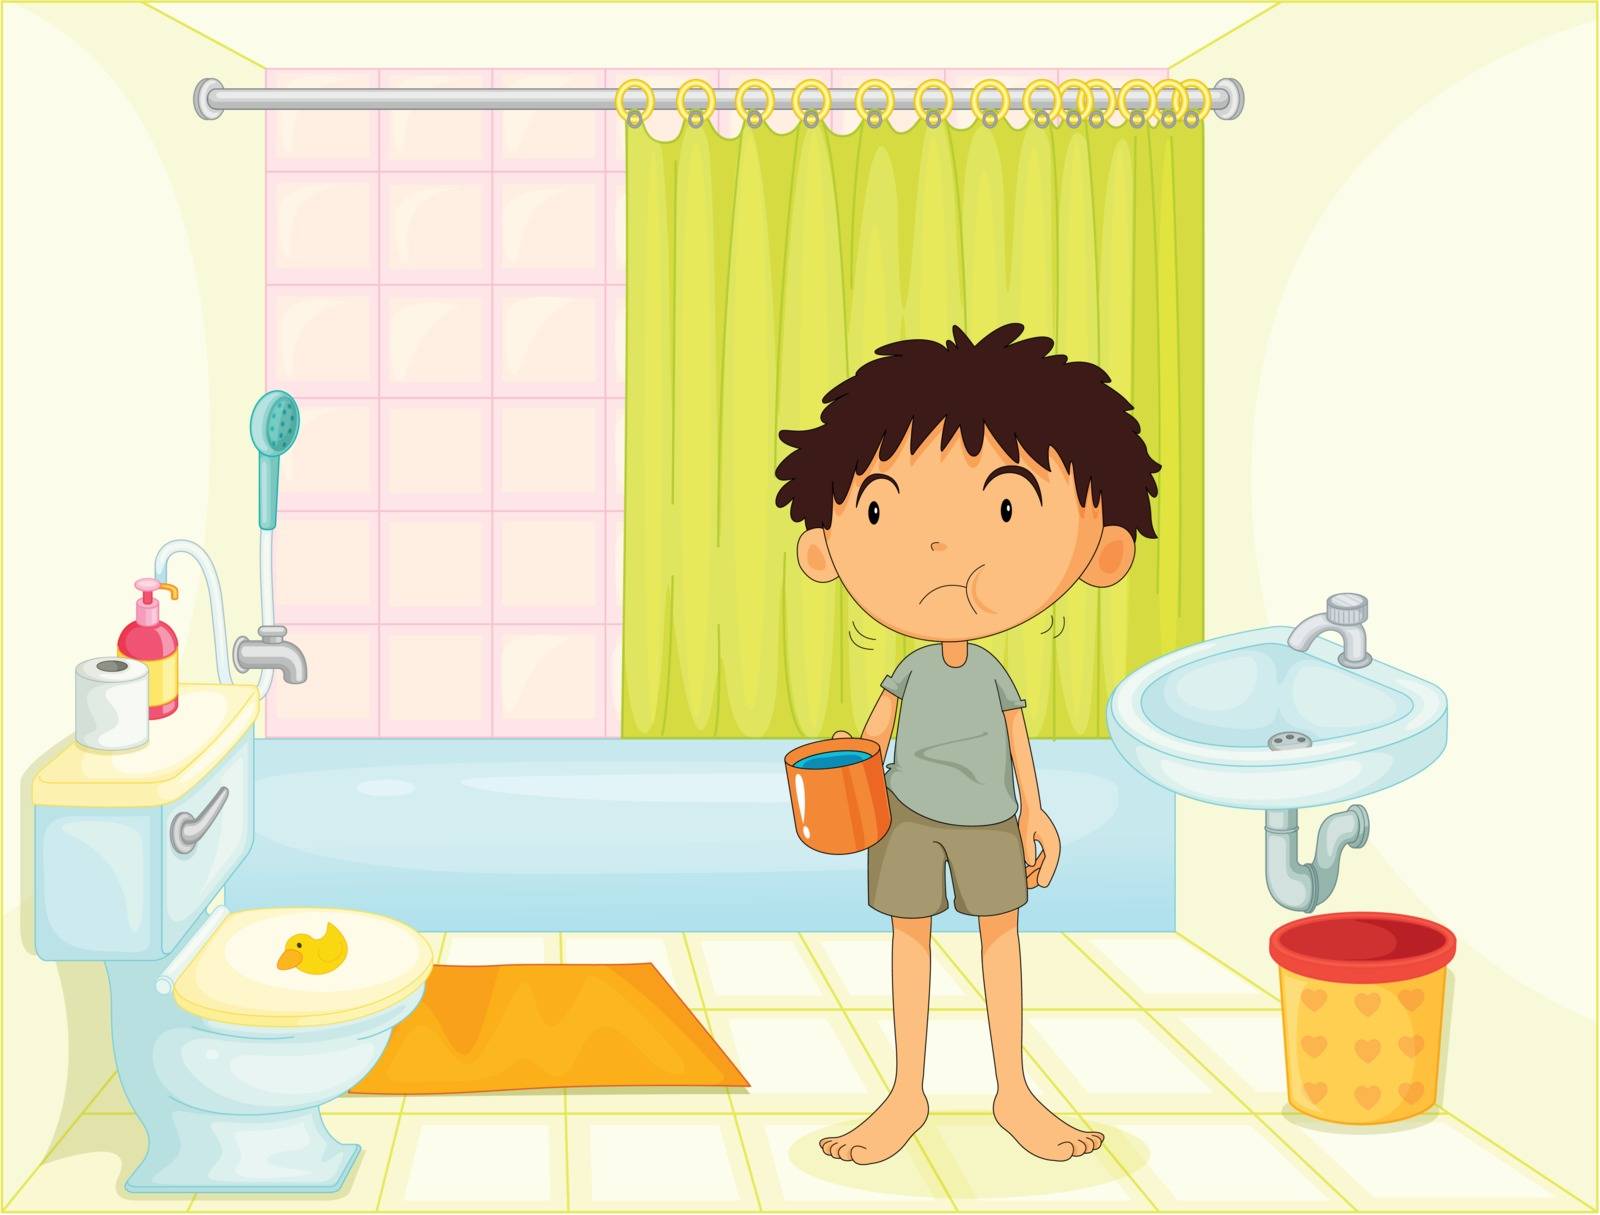 Child in bathroom illustration image